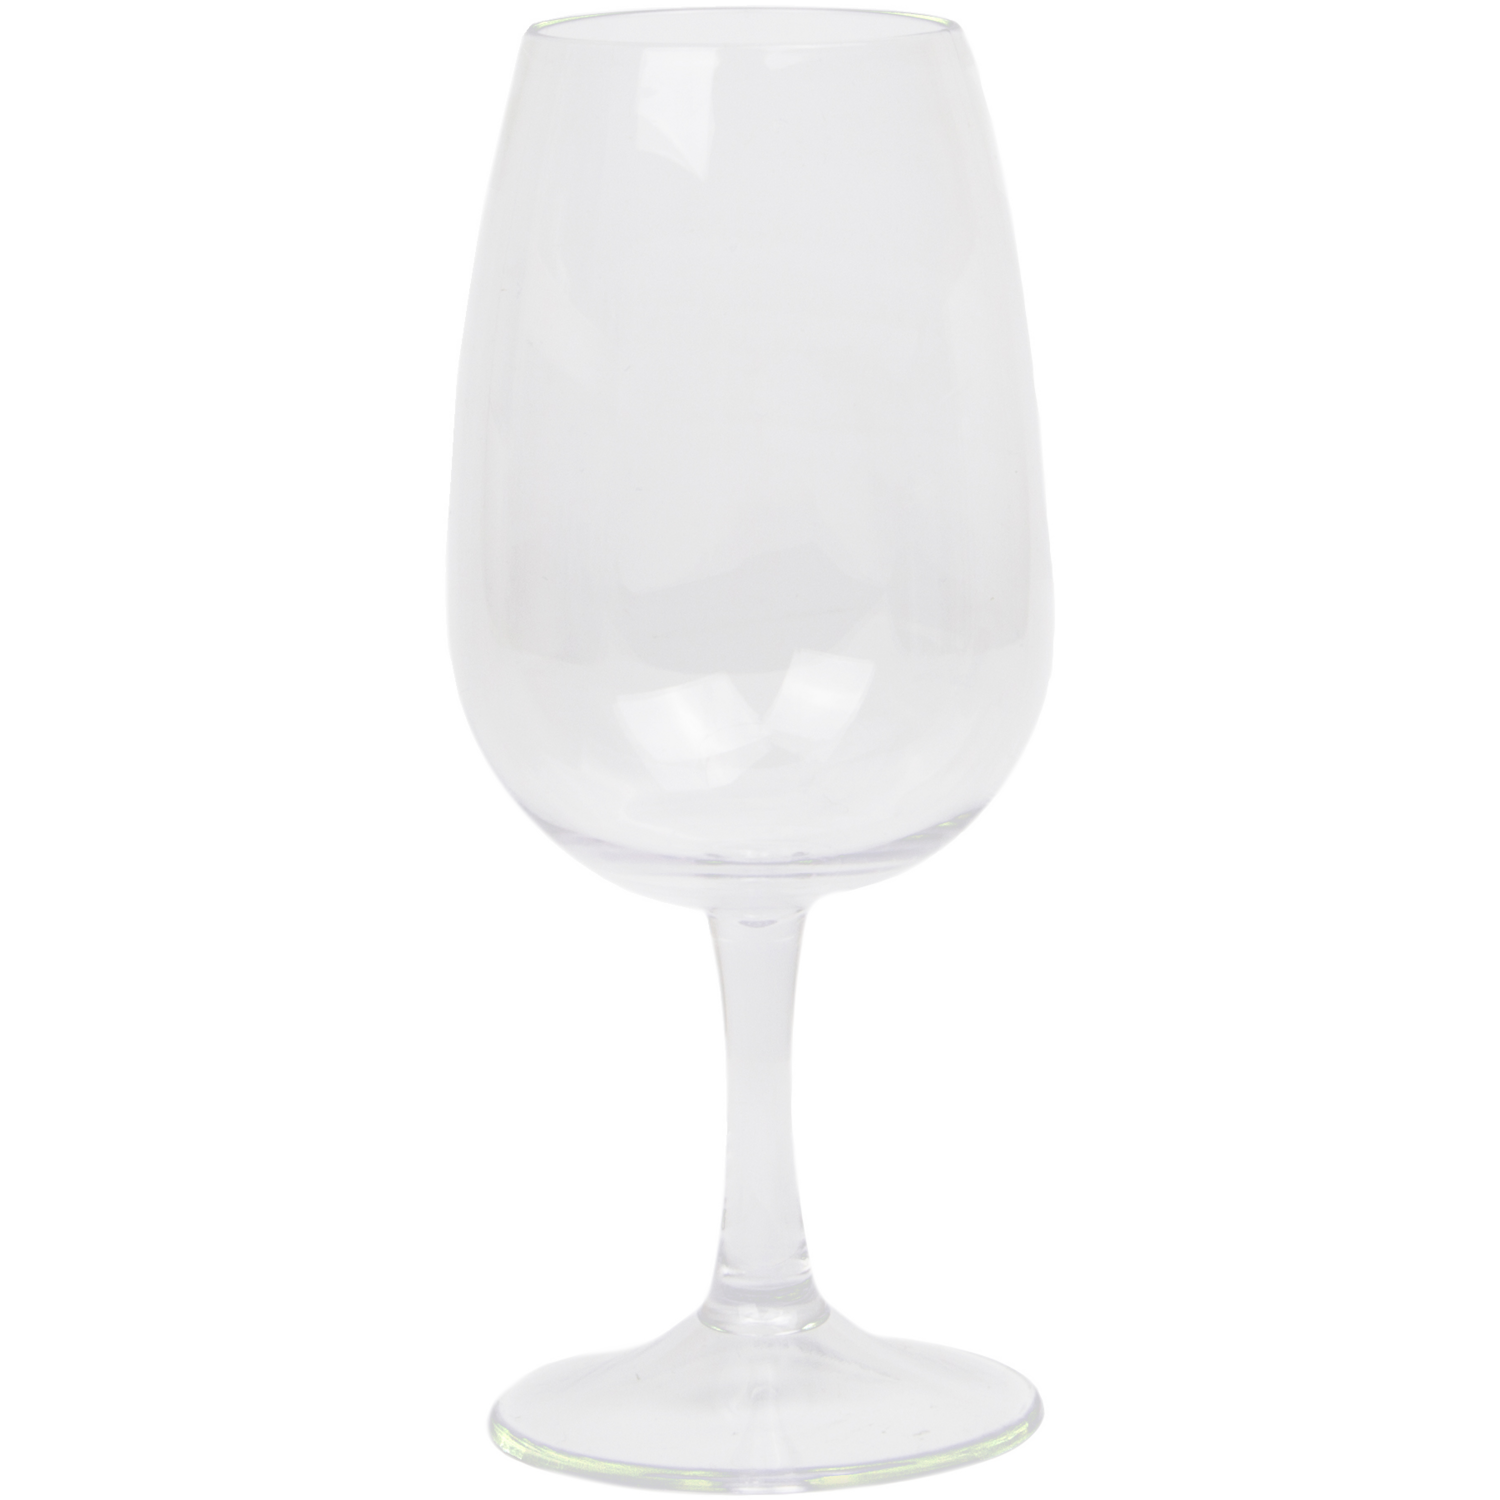 DEPA® Glas, sherryglas, reusable, onbreekbaar, pETG, 225ml, transparant 1